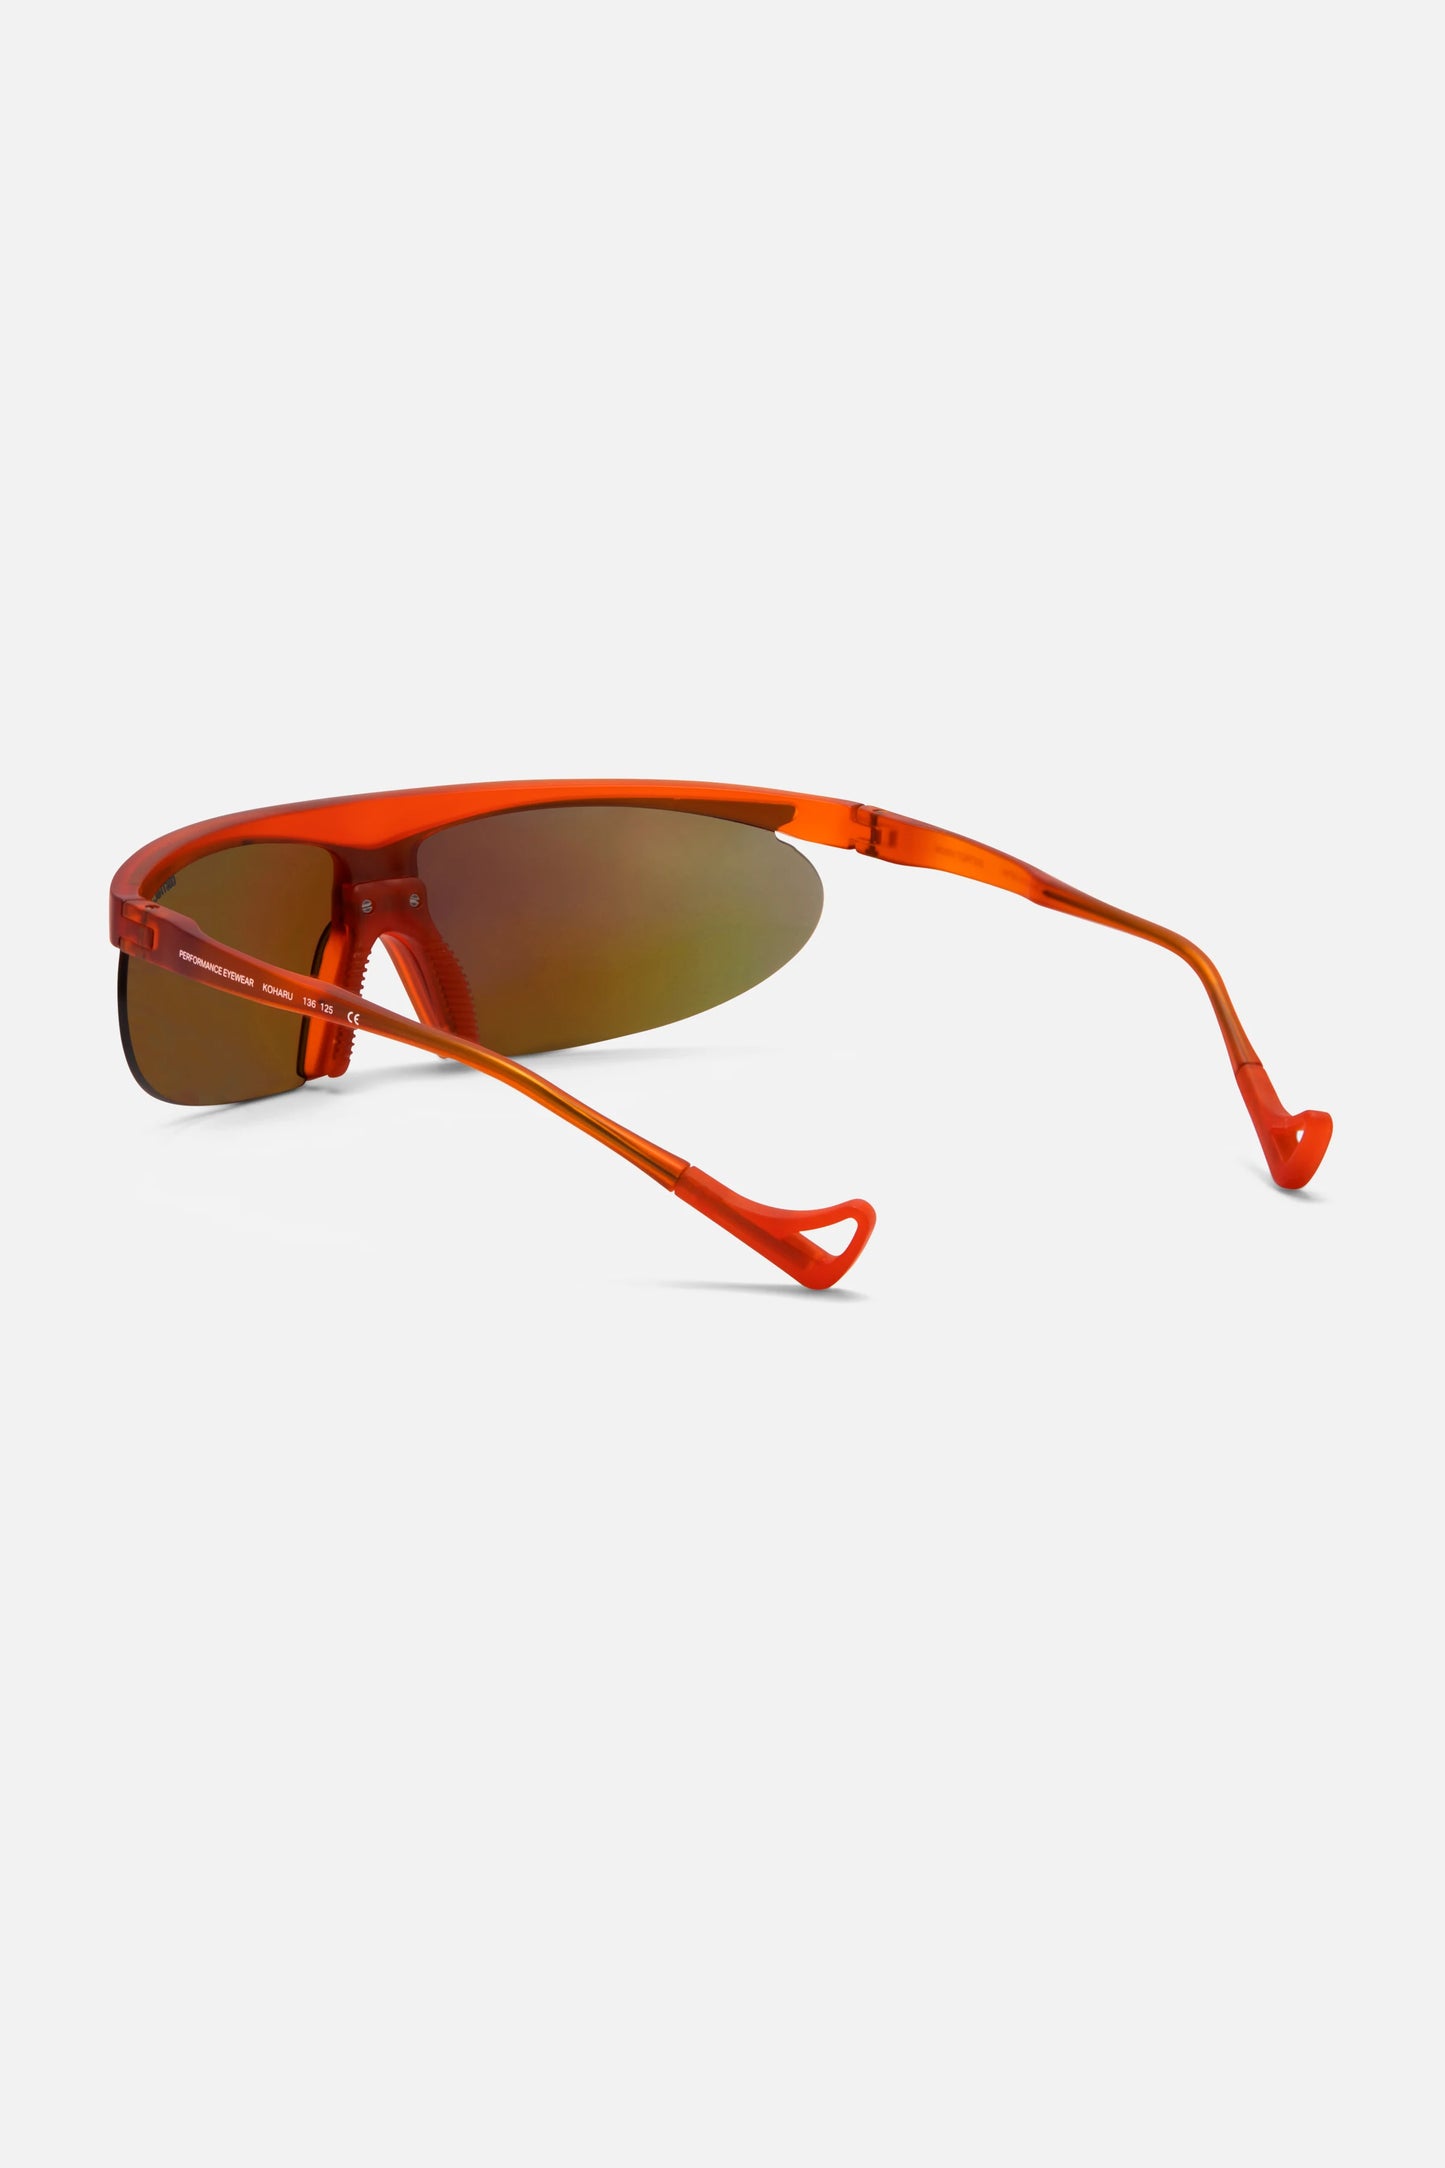 District Vision Koharu Eclipse Sunglasses in Orange